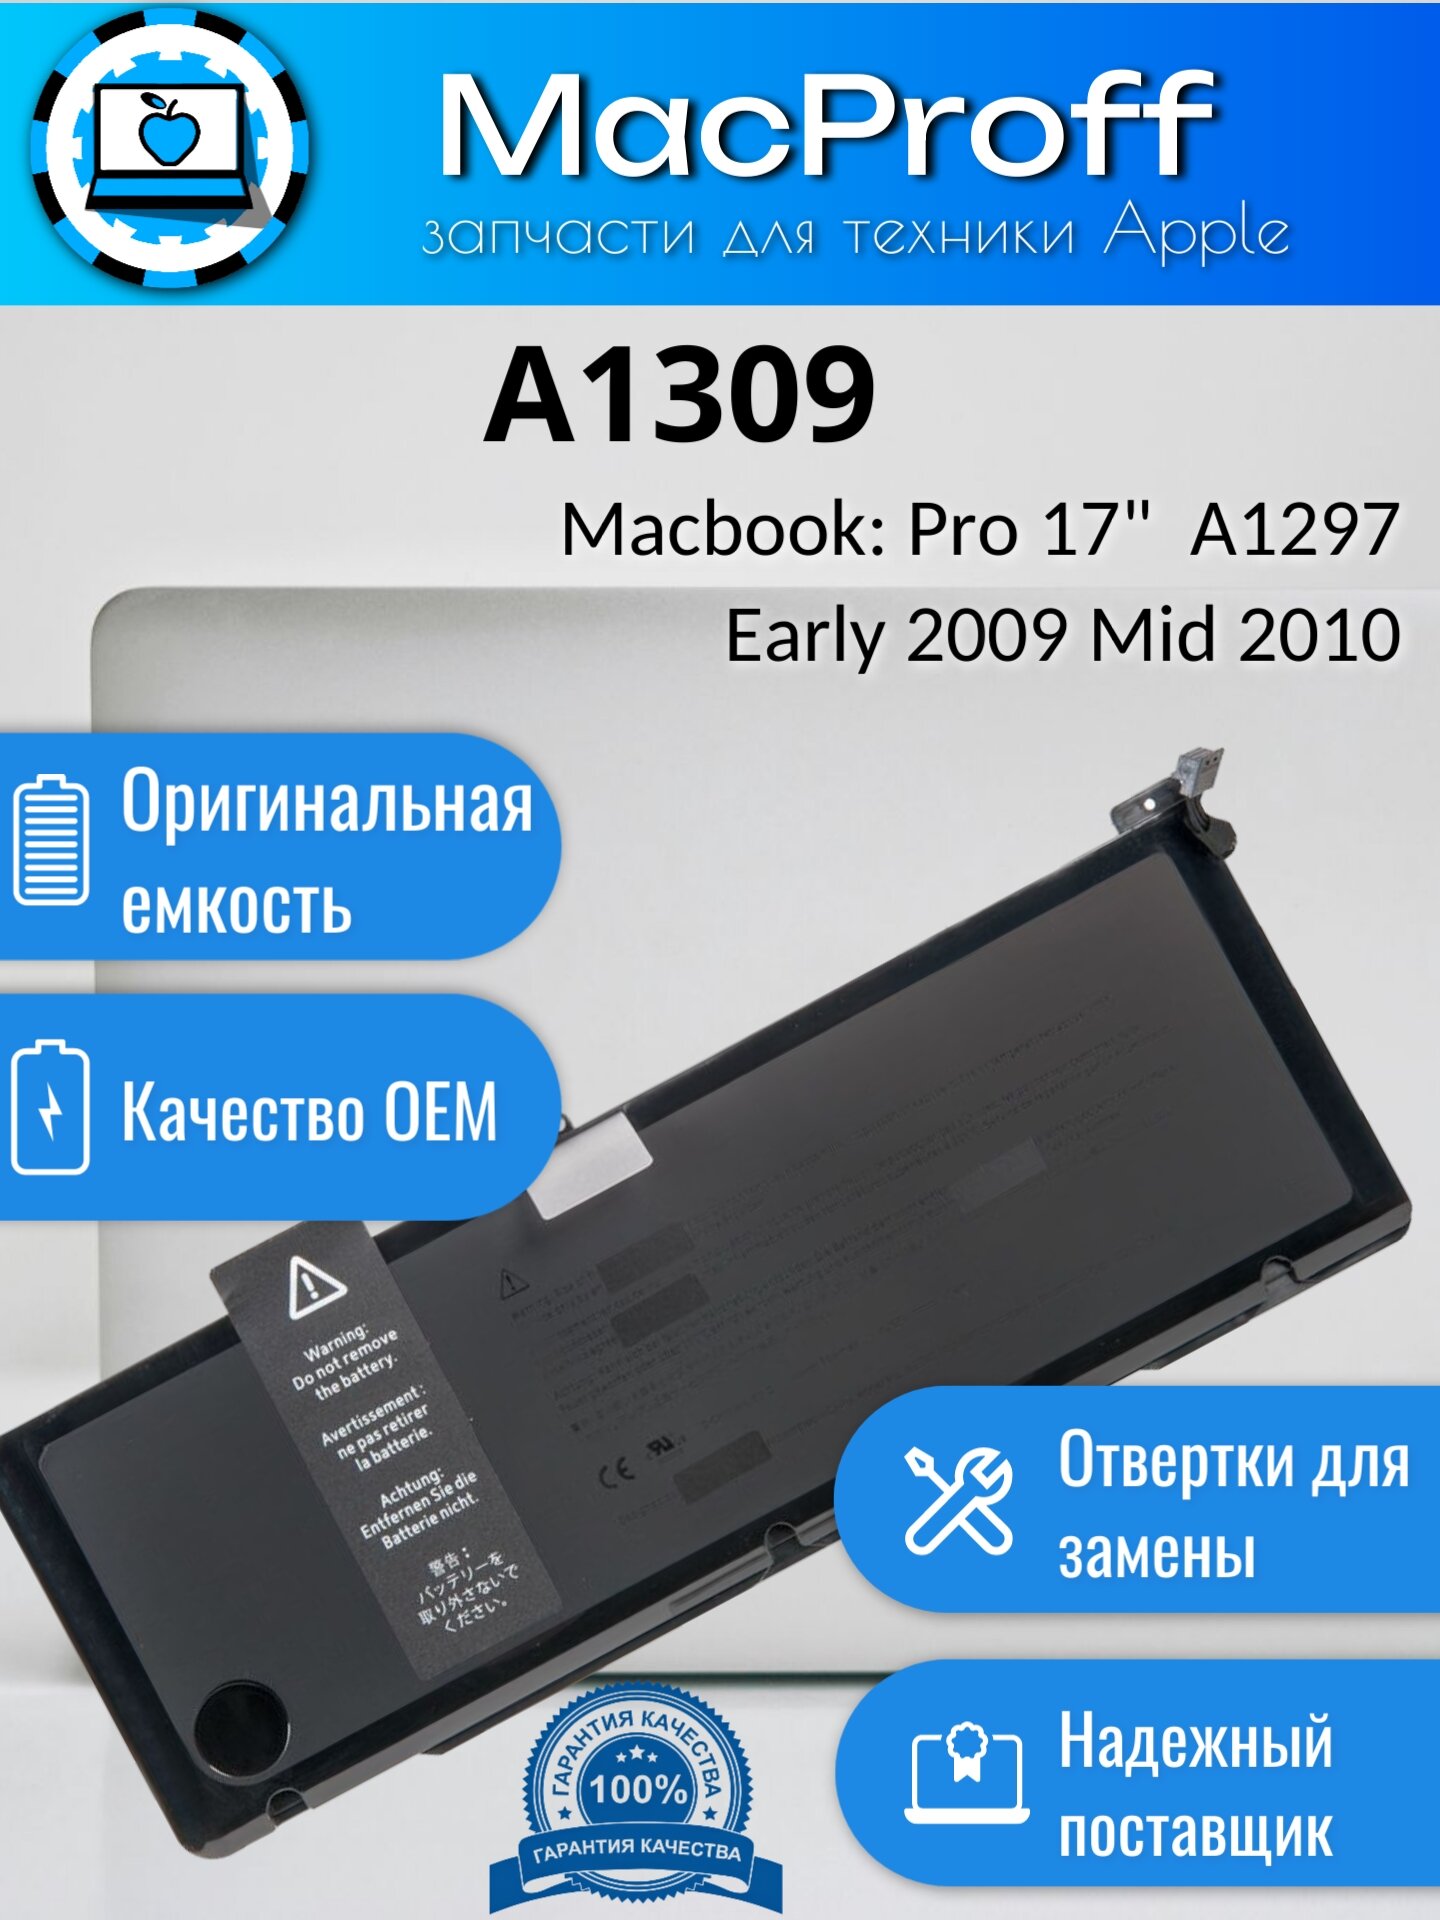 Аккумулятор для MacBook Pro 17 A1297 95Wh 7.3V A1309 Early 2009 Mid 2009 Mid 2010 661-5535 661-5037 020-6313-C / OEM